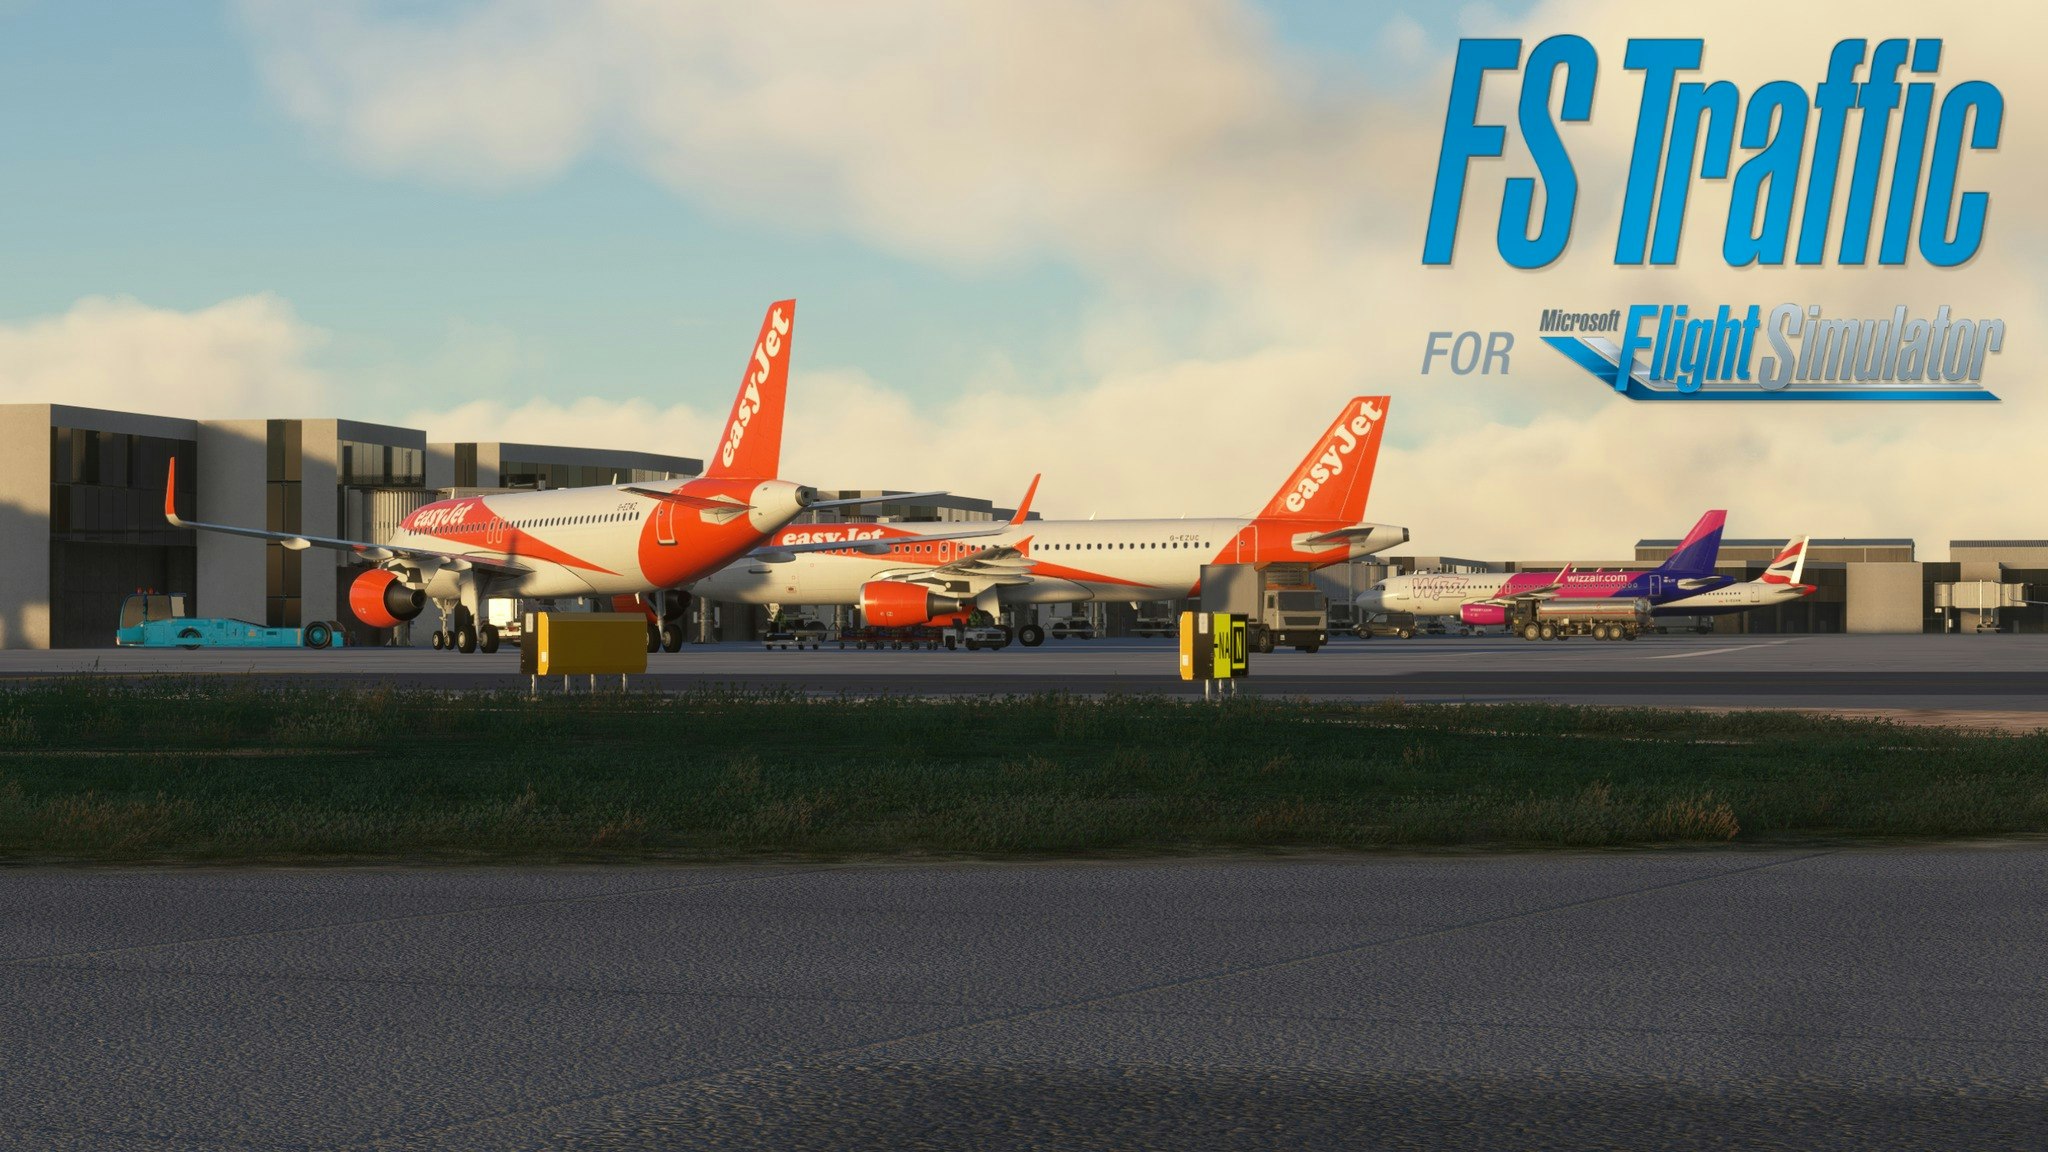 Just Flight Announces FS Traffic for MSFS